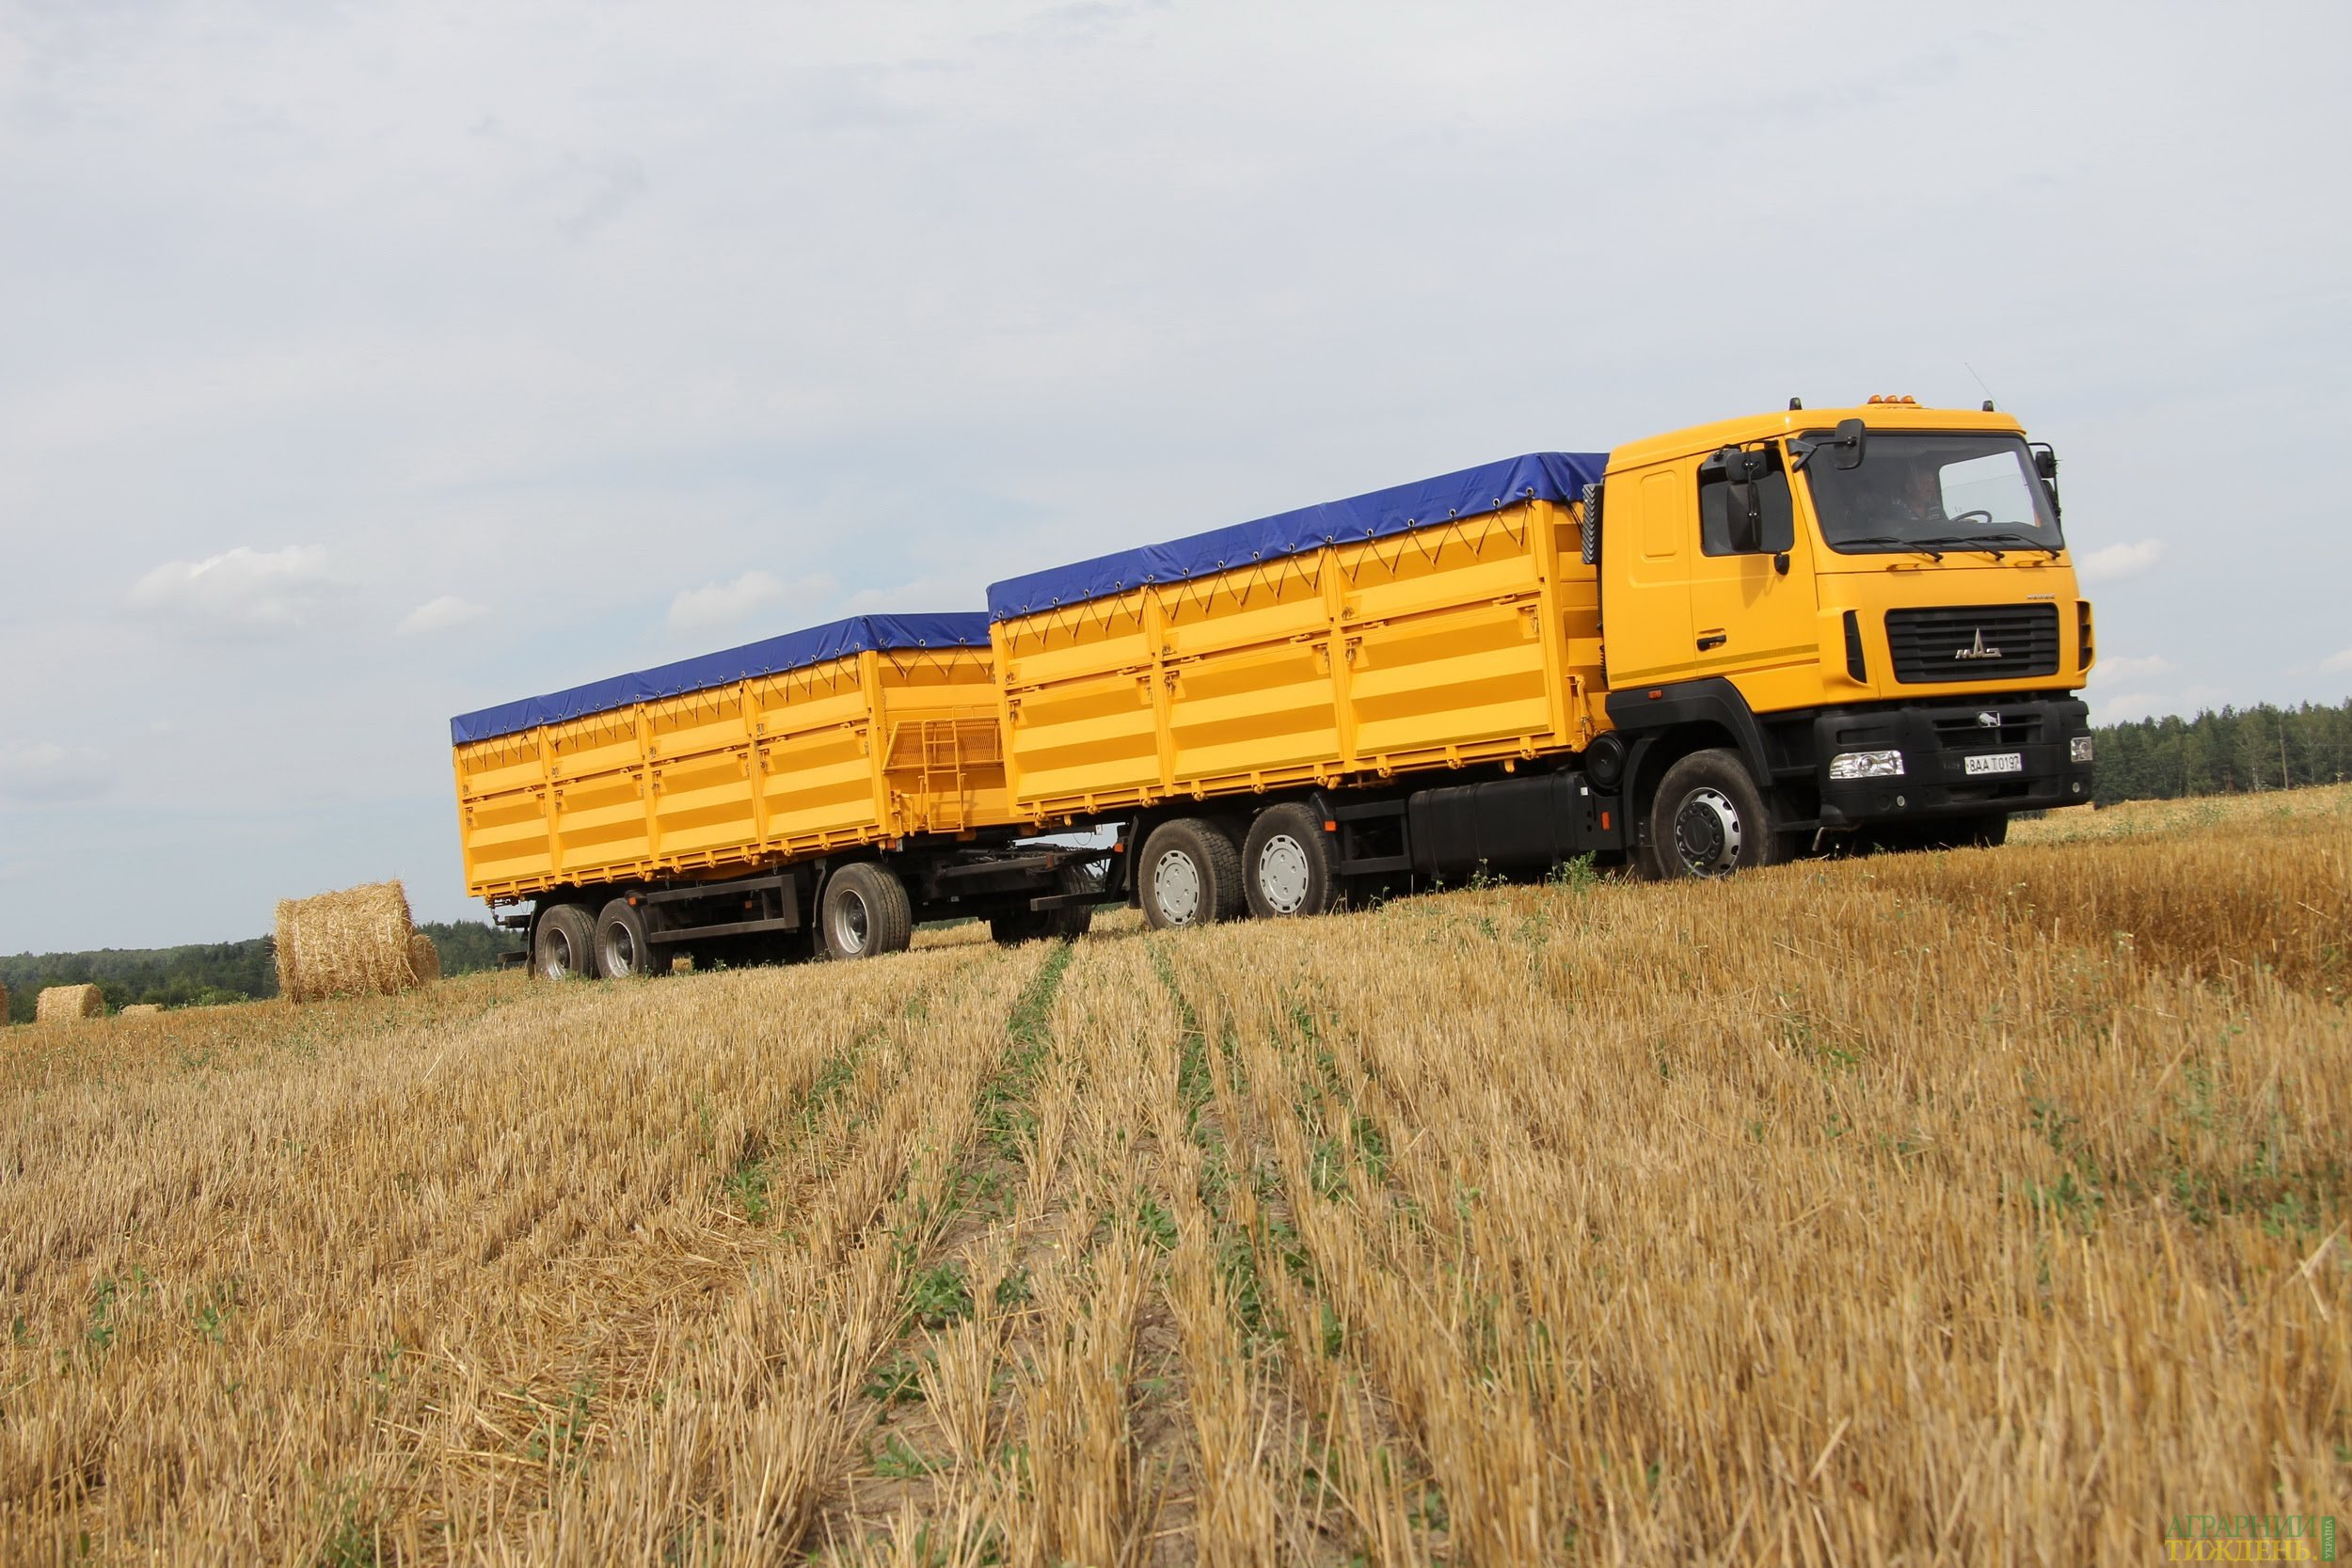 Ukraine Exports More than 14.5 Million Tons of Corn